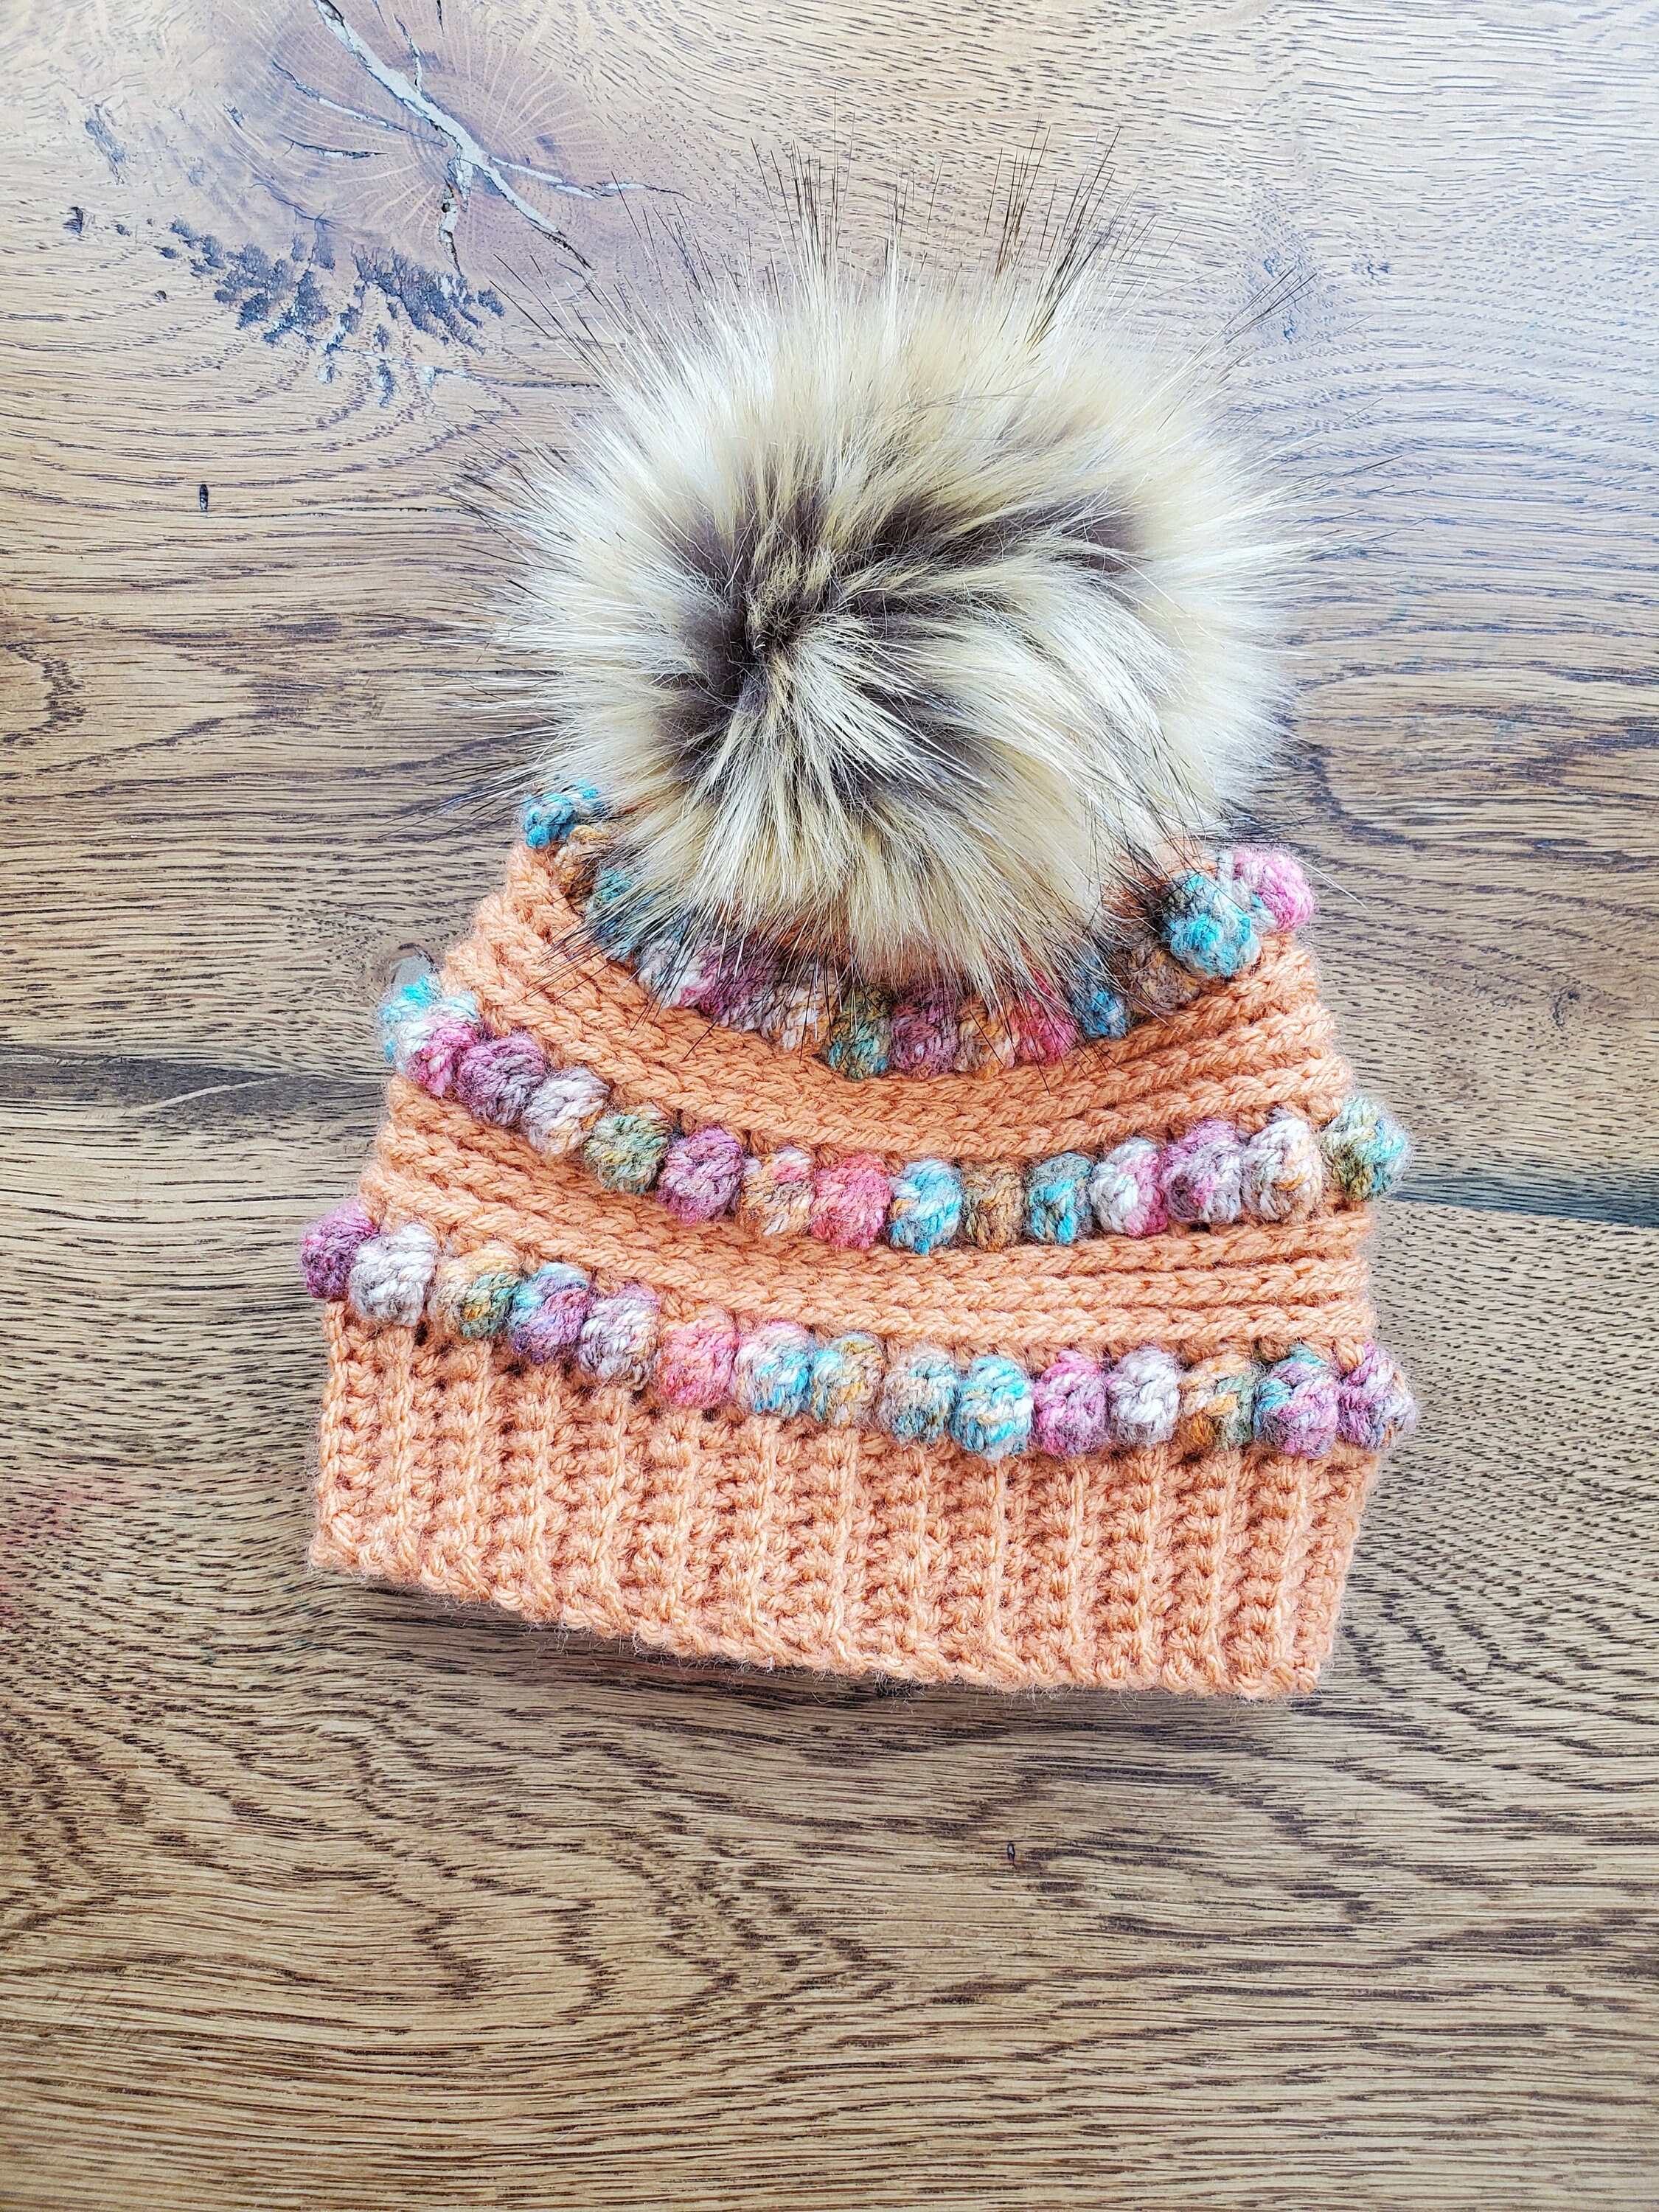 Baby crochet hatfaux fur pom pomorange with jewel tones9-12 months